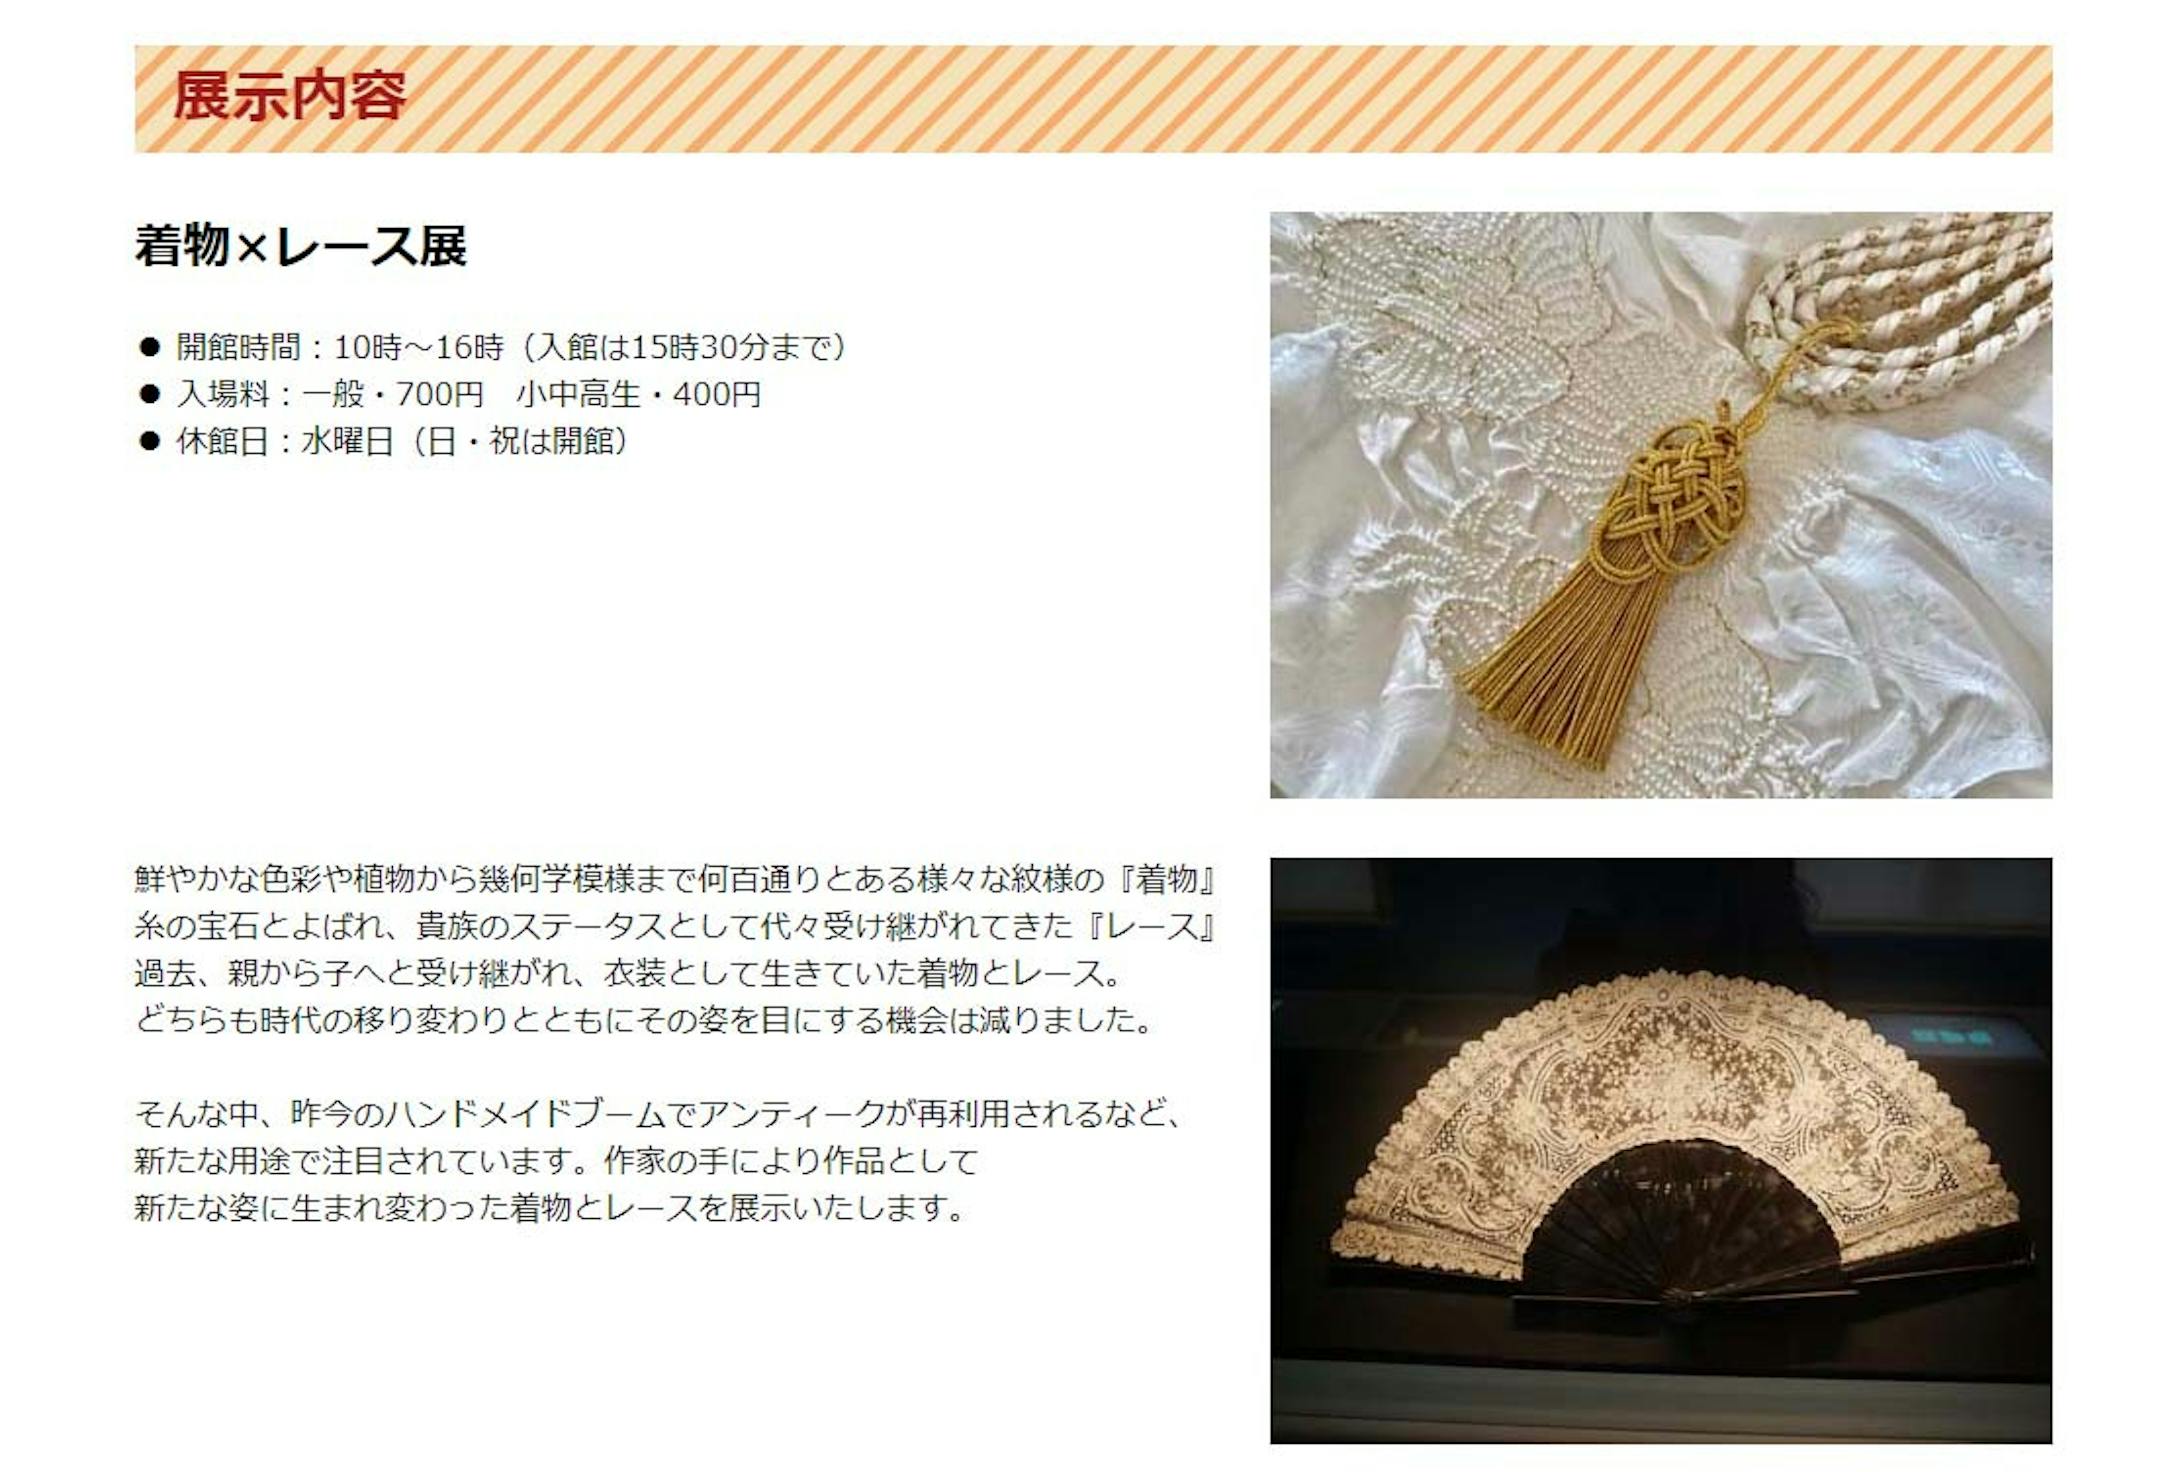 kimono & lace exhibition (web)-4